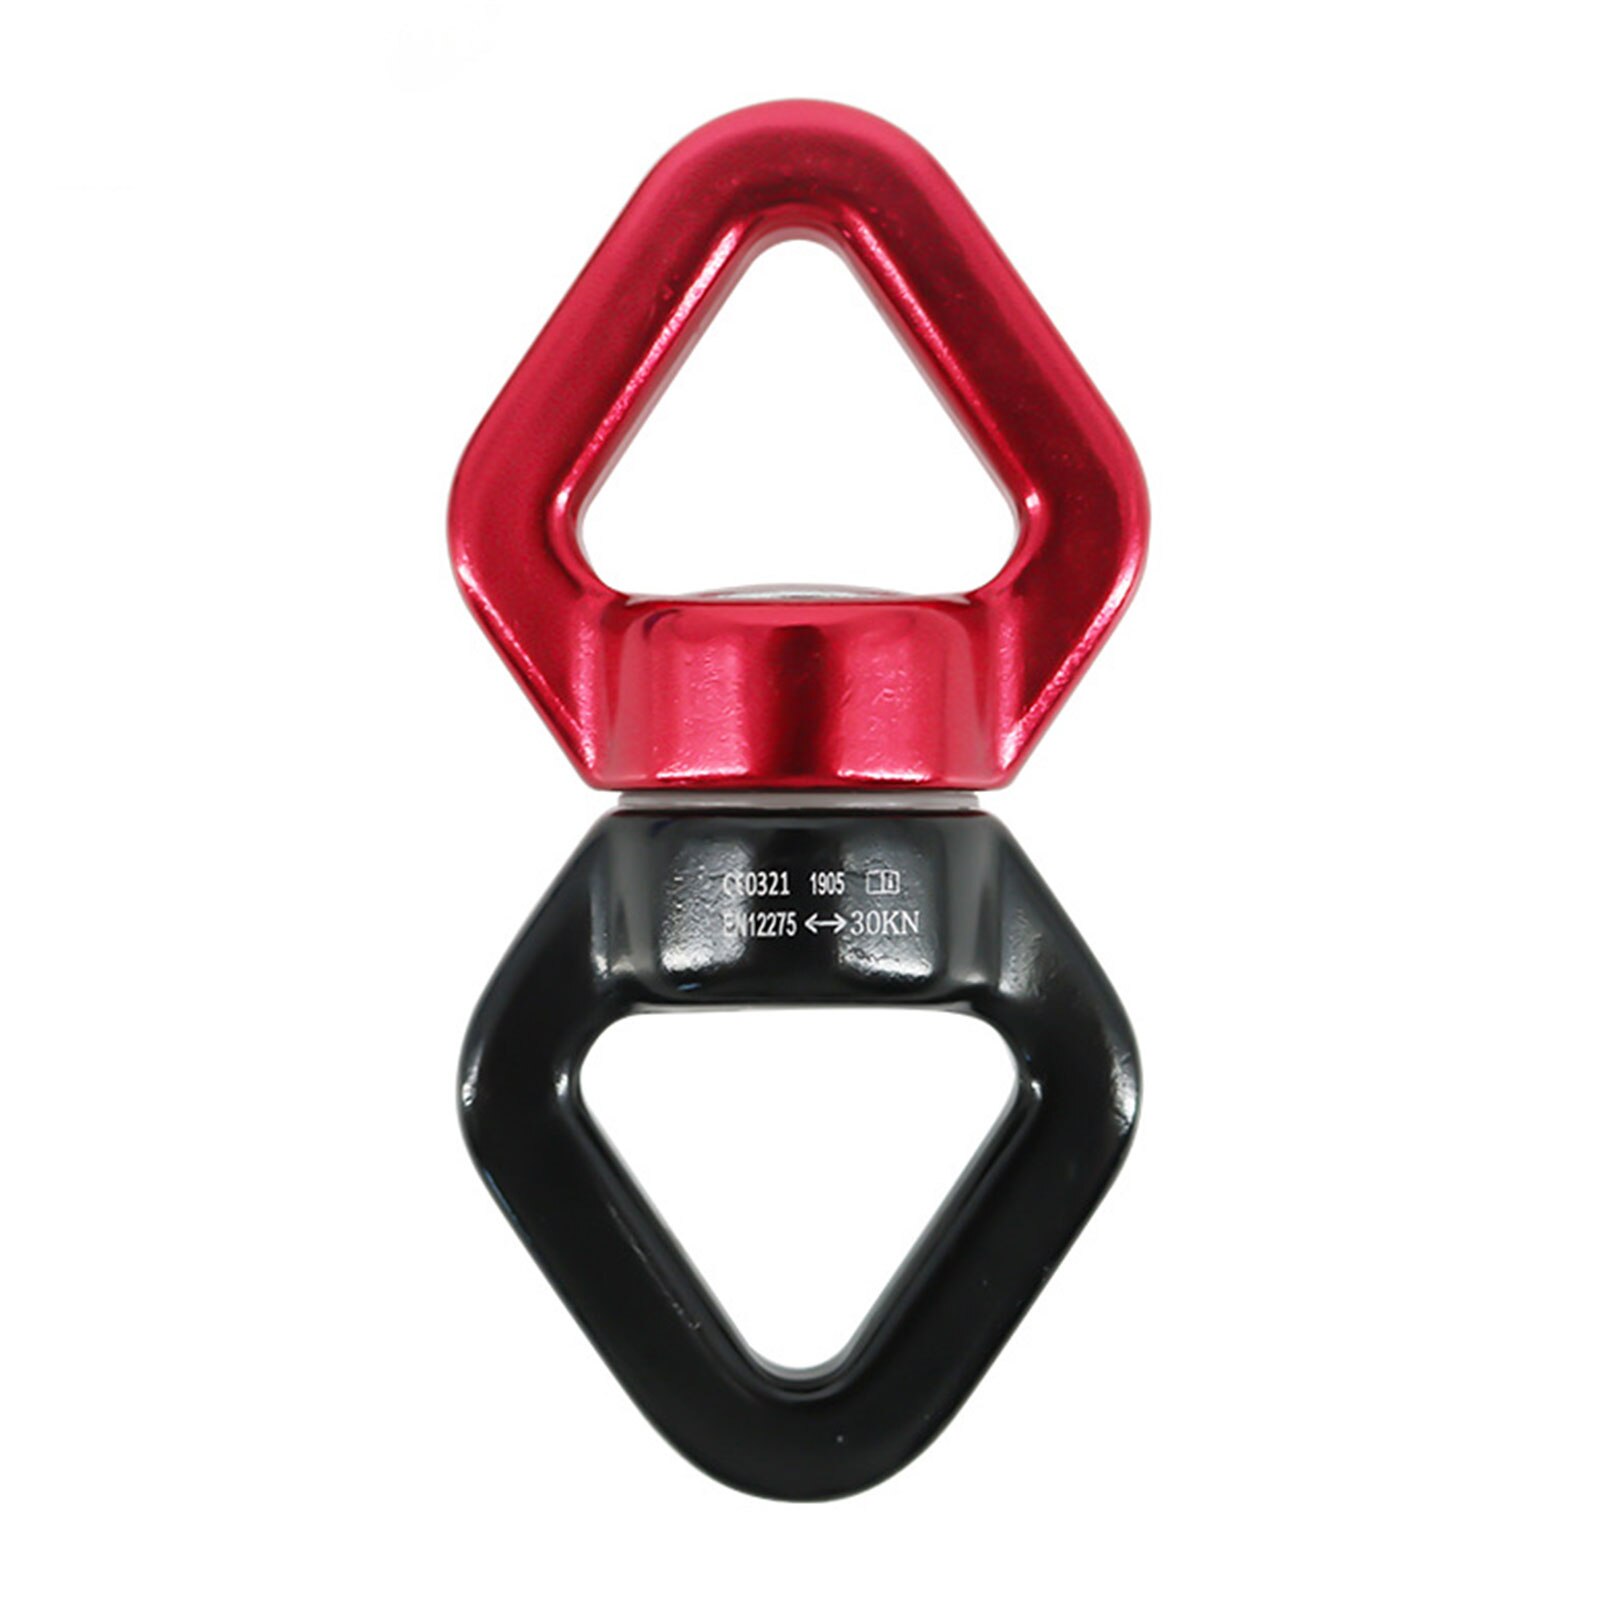 Swing Swivel 30kN Safety Rotational Device Swing Spinner Carabiner Swivel Climbing Rope Swivels for Swing Setting yoga Hammock: Red Black